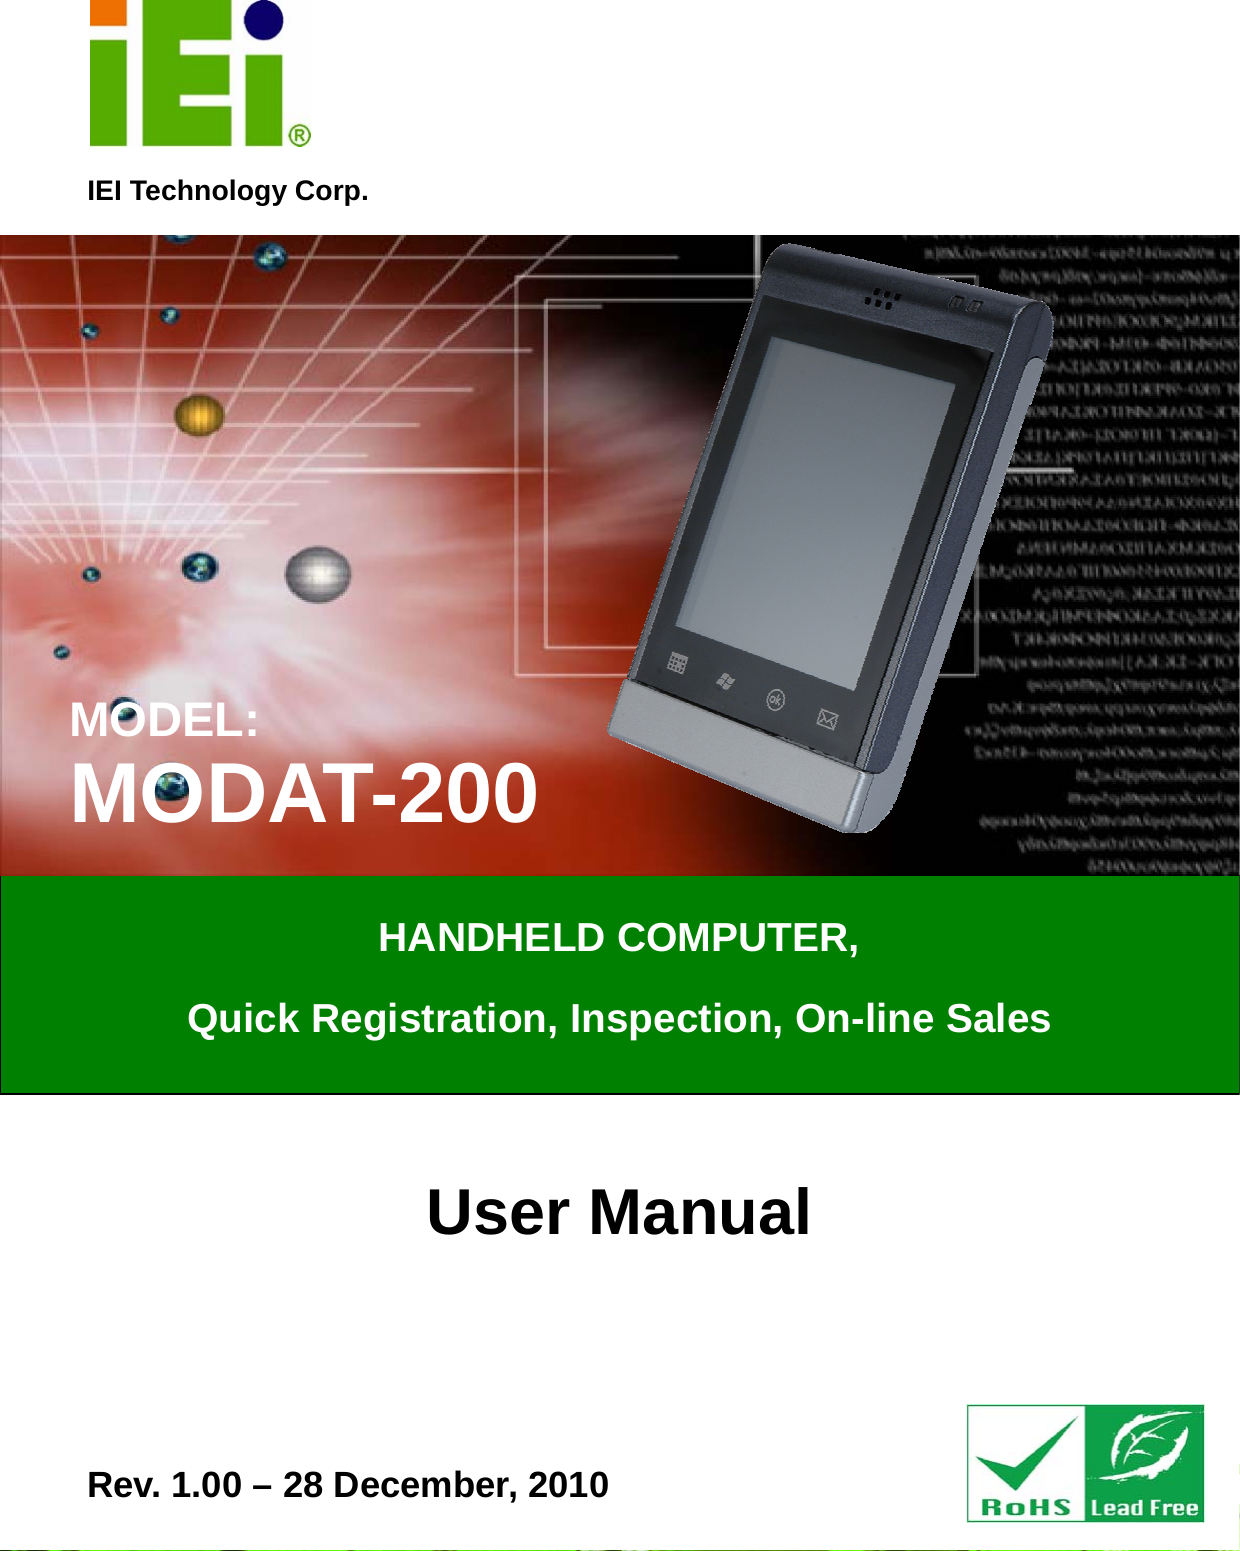   MODAT-200 Page 1IEI Technology Corp. User Manual  MODEL: MODAT-200 HANDHELD COMPUTER,    Quick Registration, Inspection, On-line Sales Rev. 1.00 – 28 December, 2010 